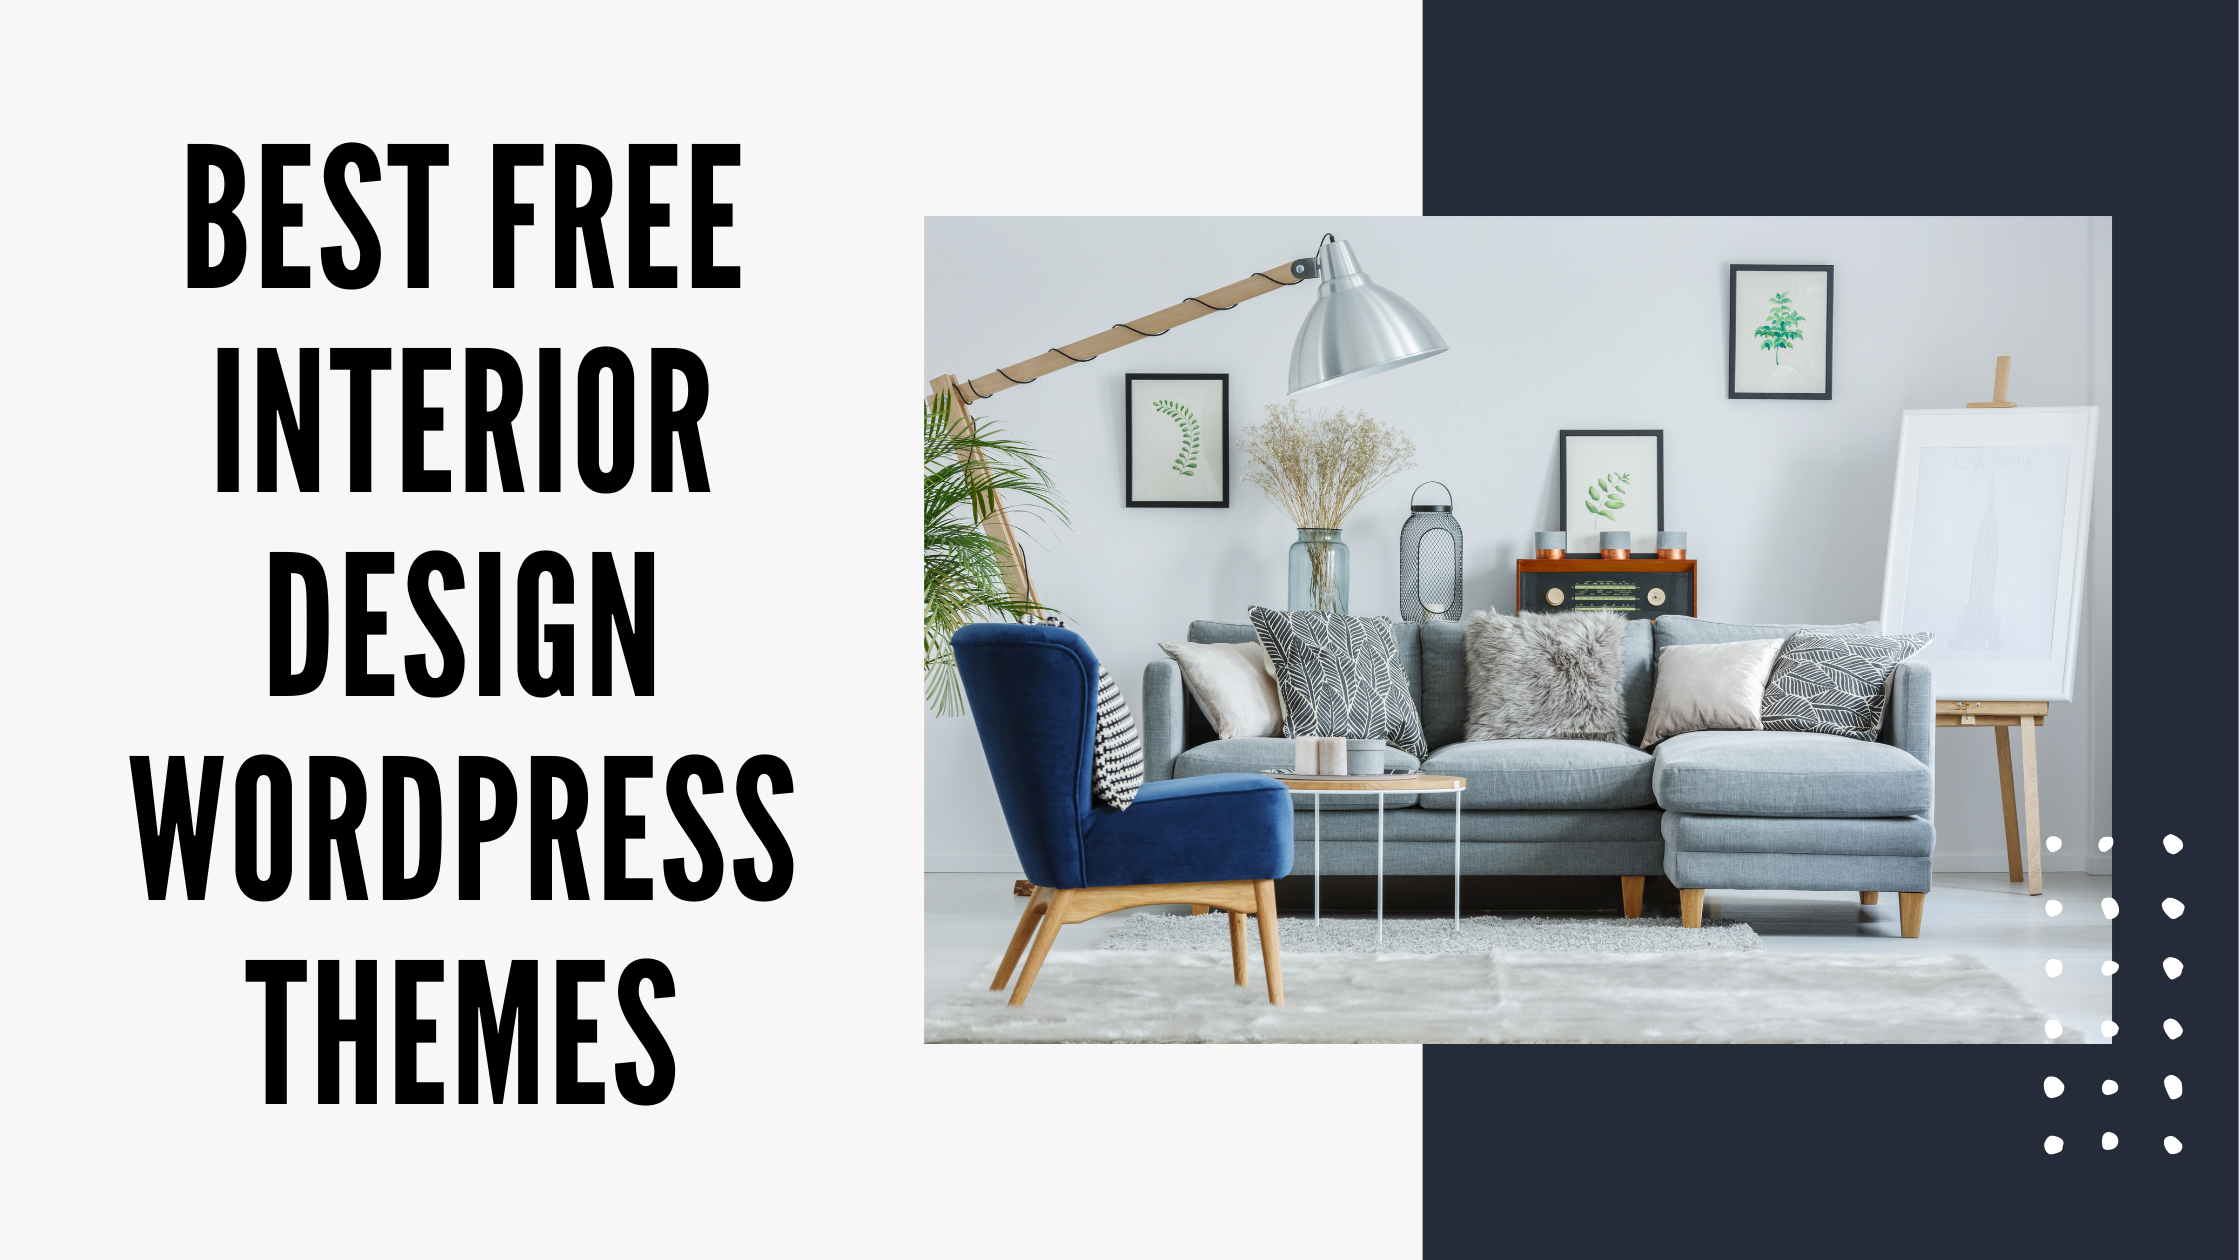 Best free iterior design wordpress themes